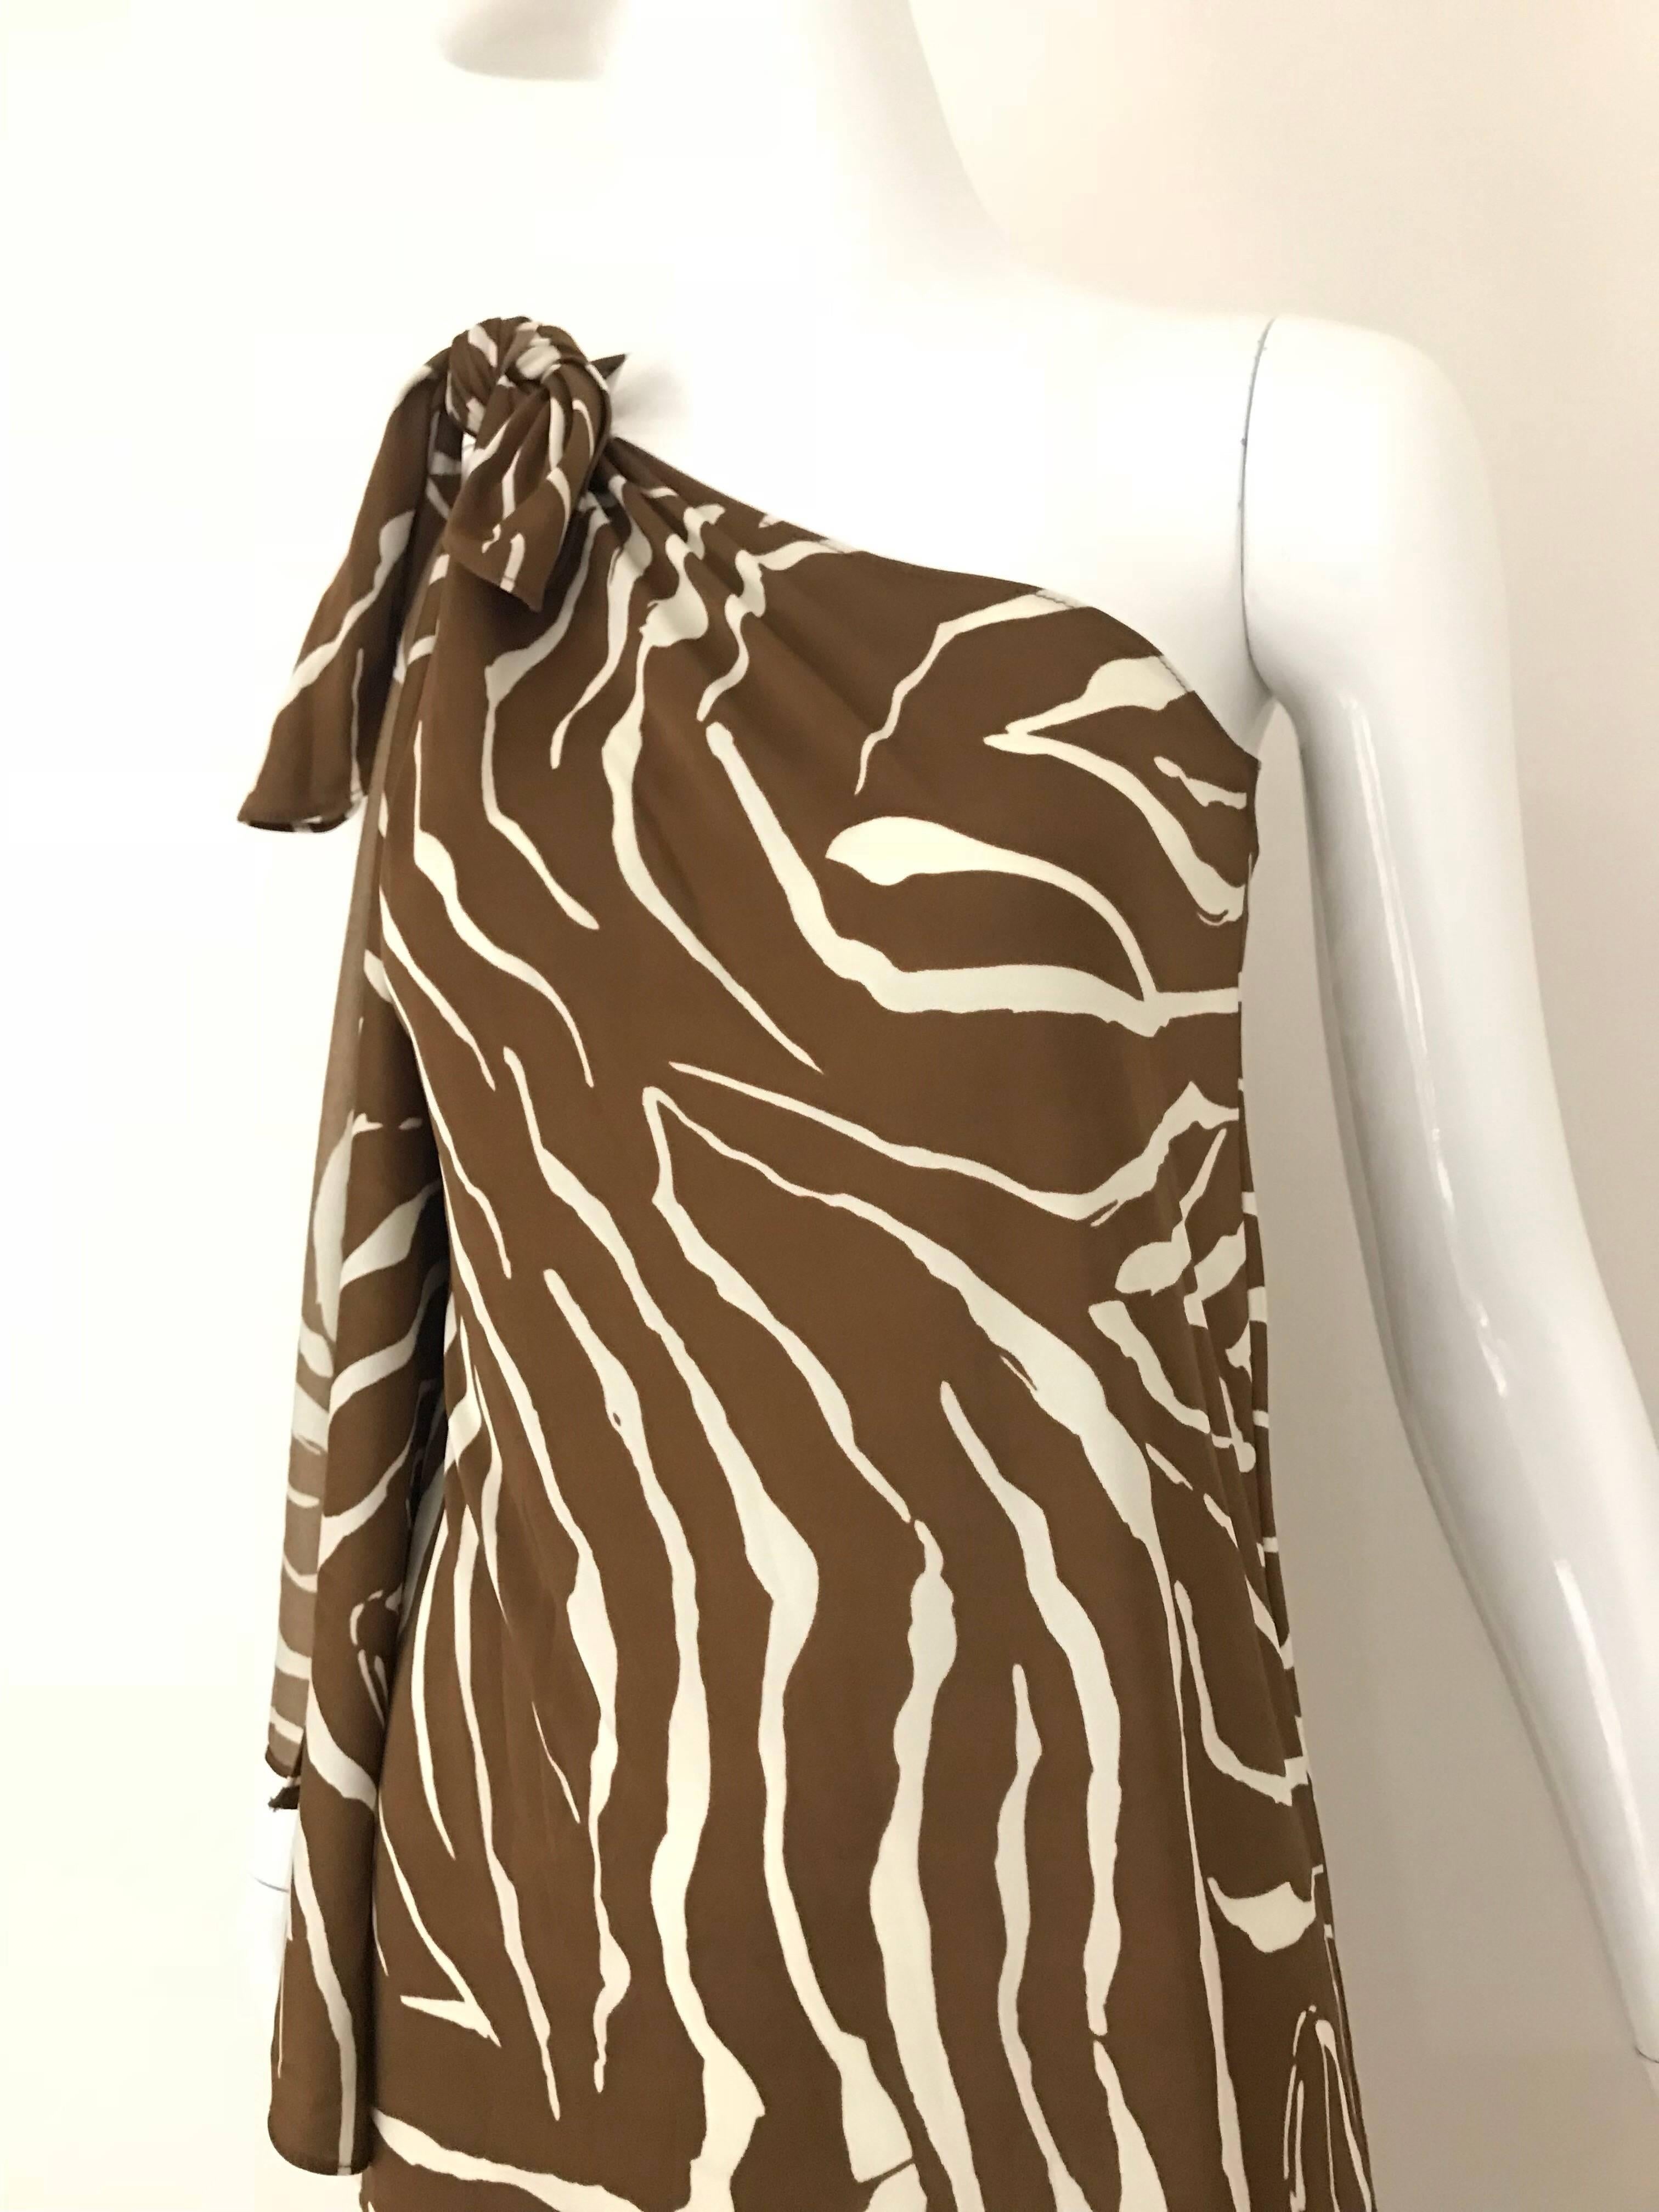 Vintage 1970s Bill Tice Jersey Brown and White Zebra print one shoulder knit dress.
Size Medium / 6